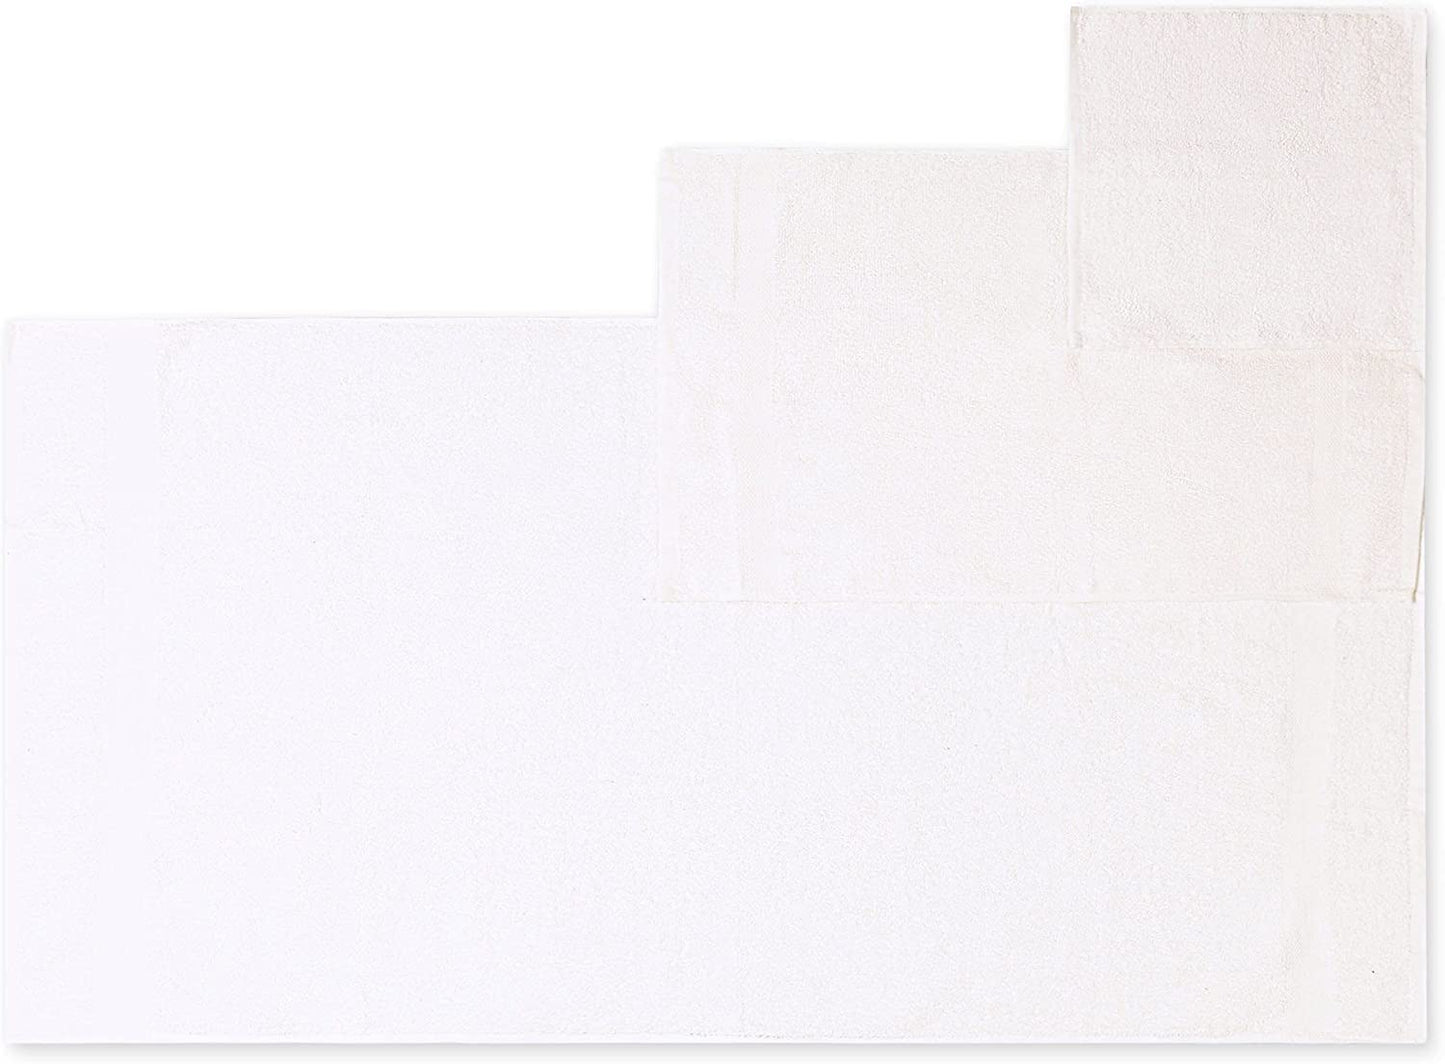 8-Piece White Ring Spun Cotton Highly Absorbent Bath Towel Set